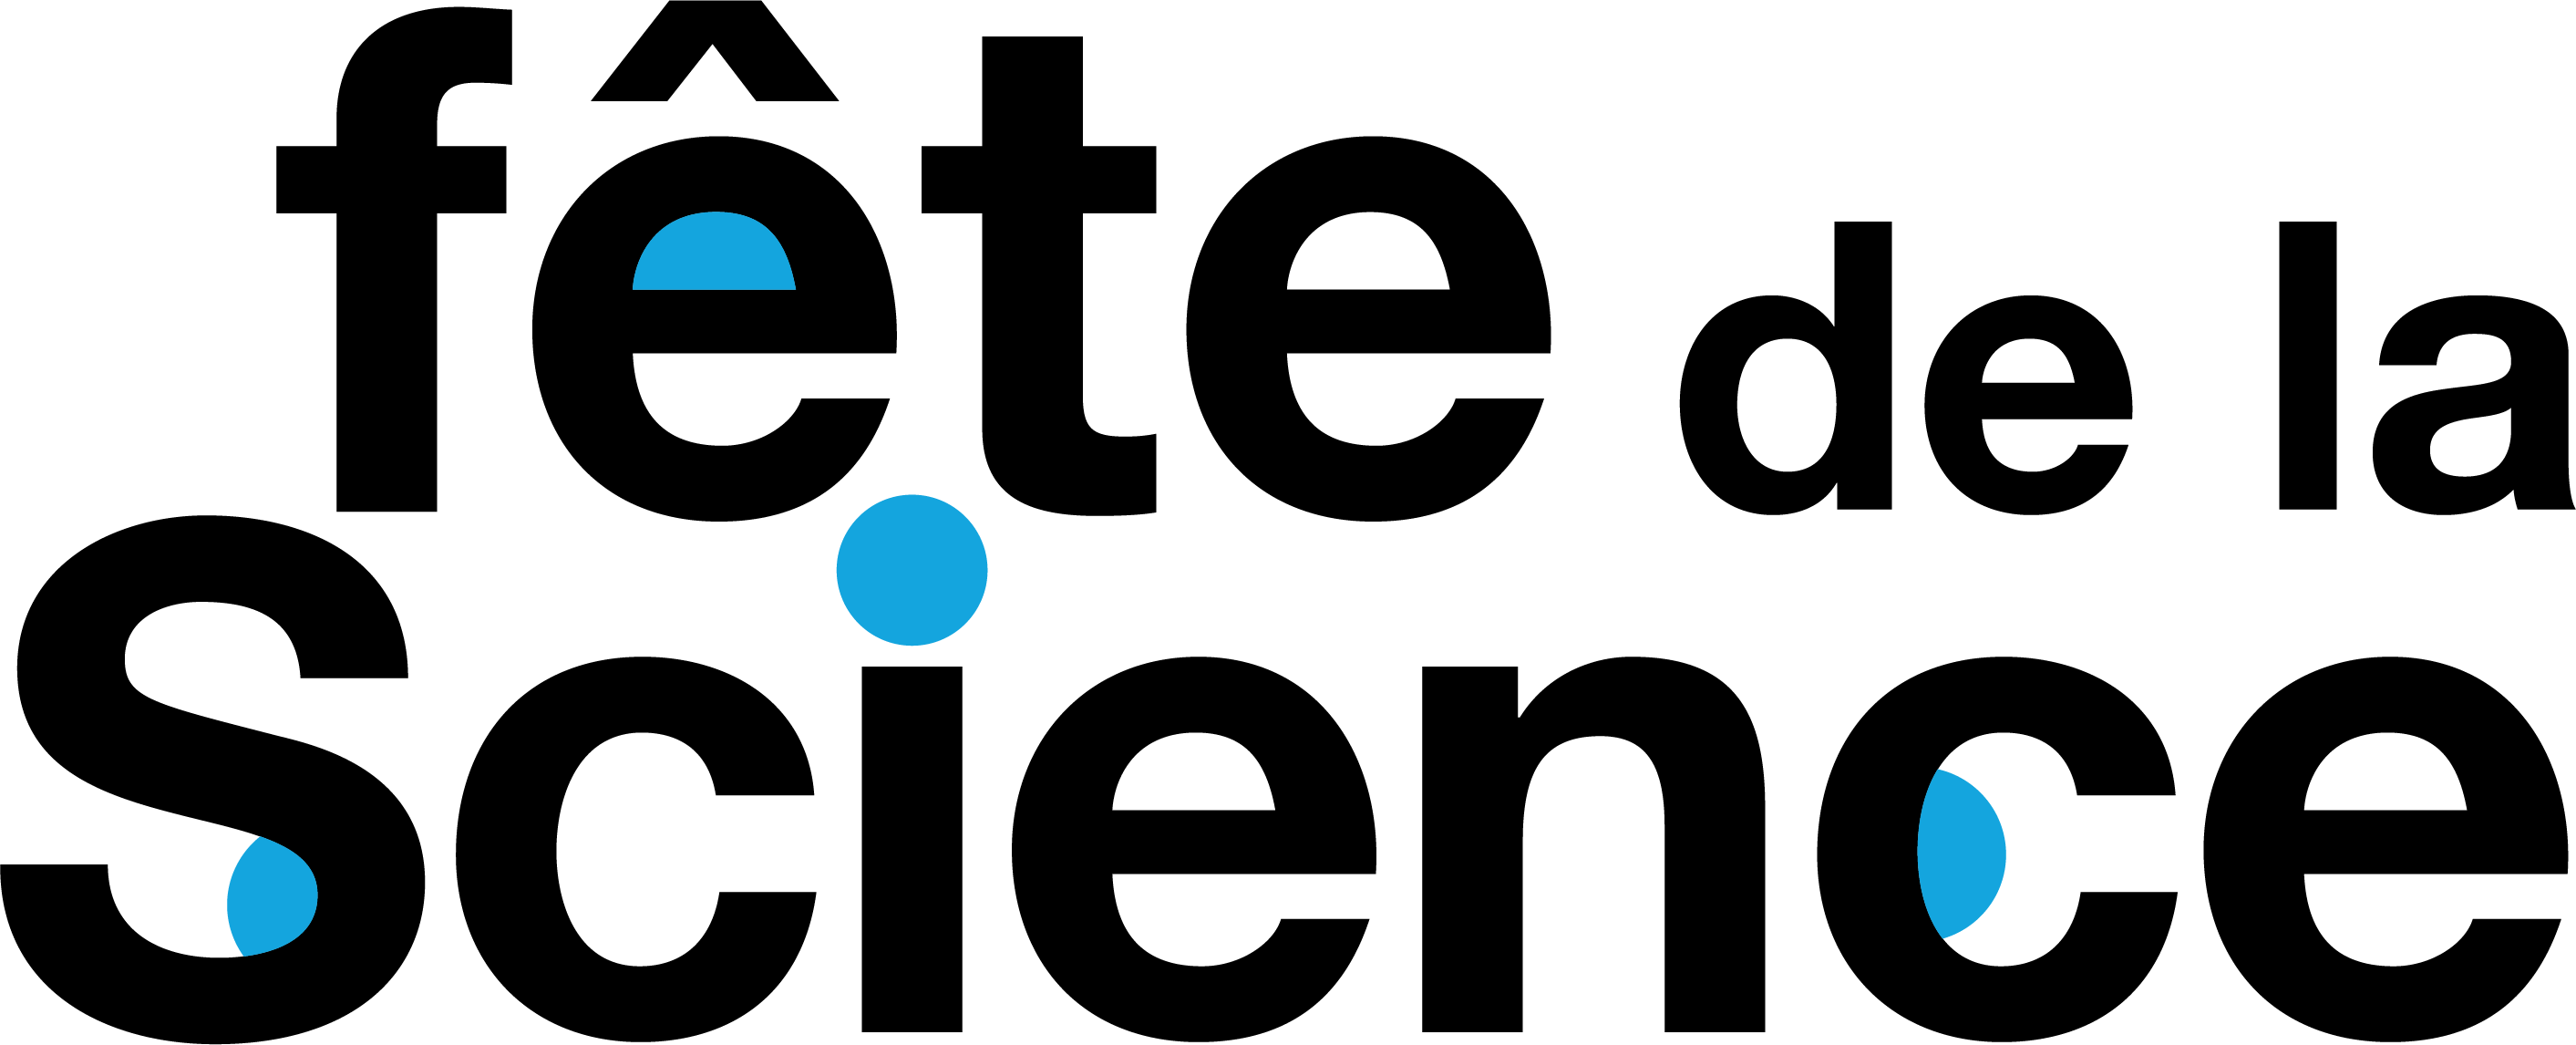 logo fetedelasicence sans bleu